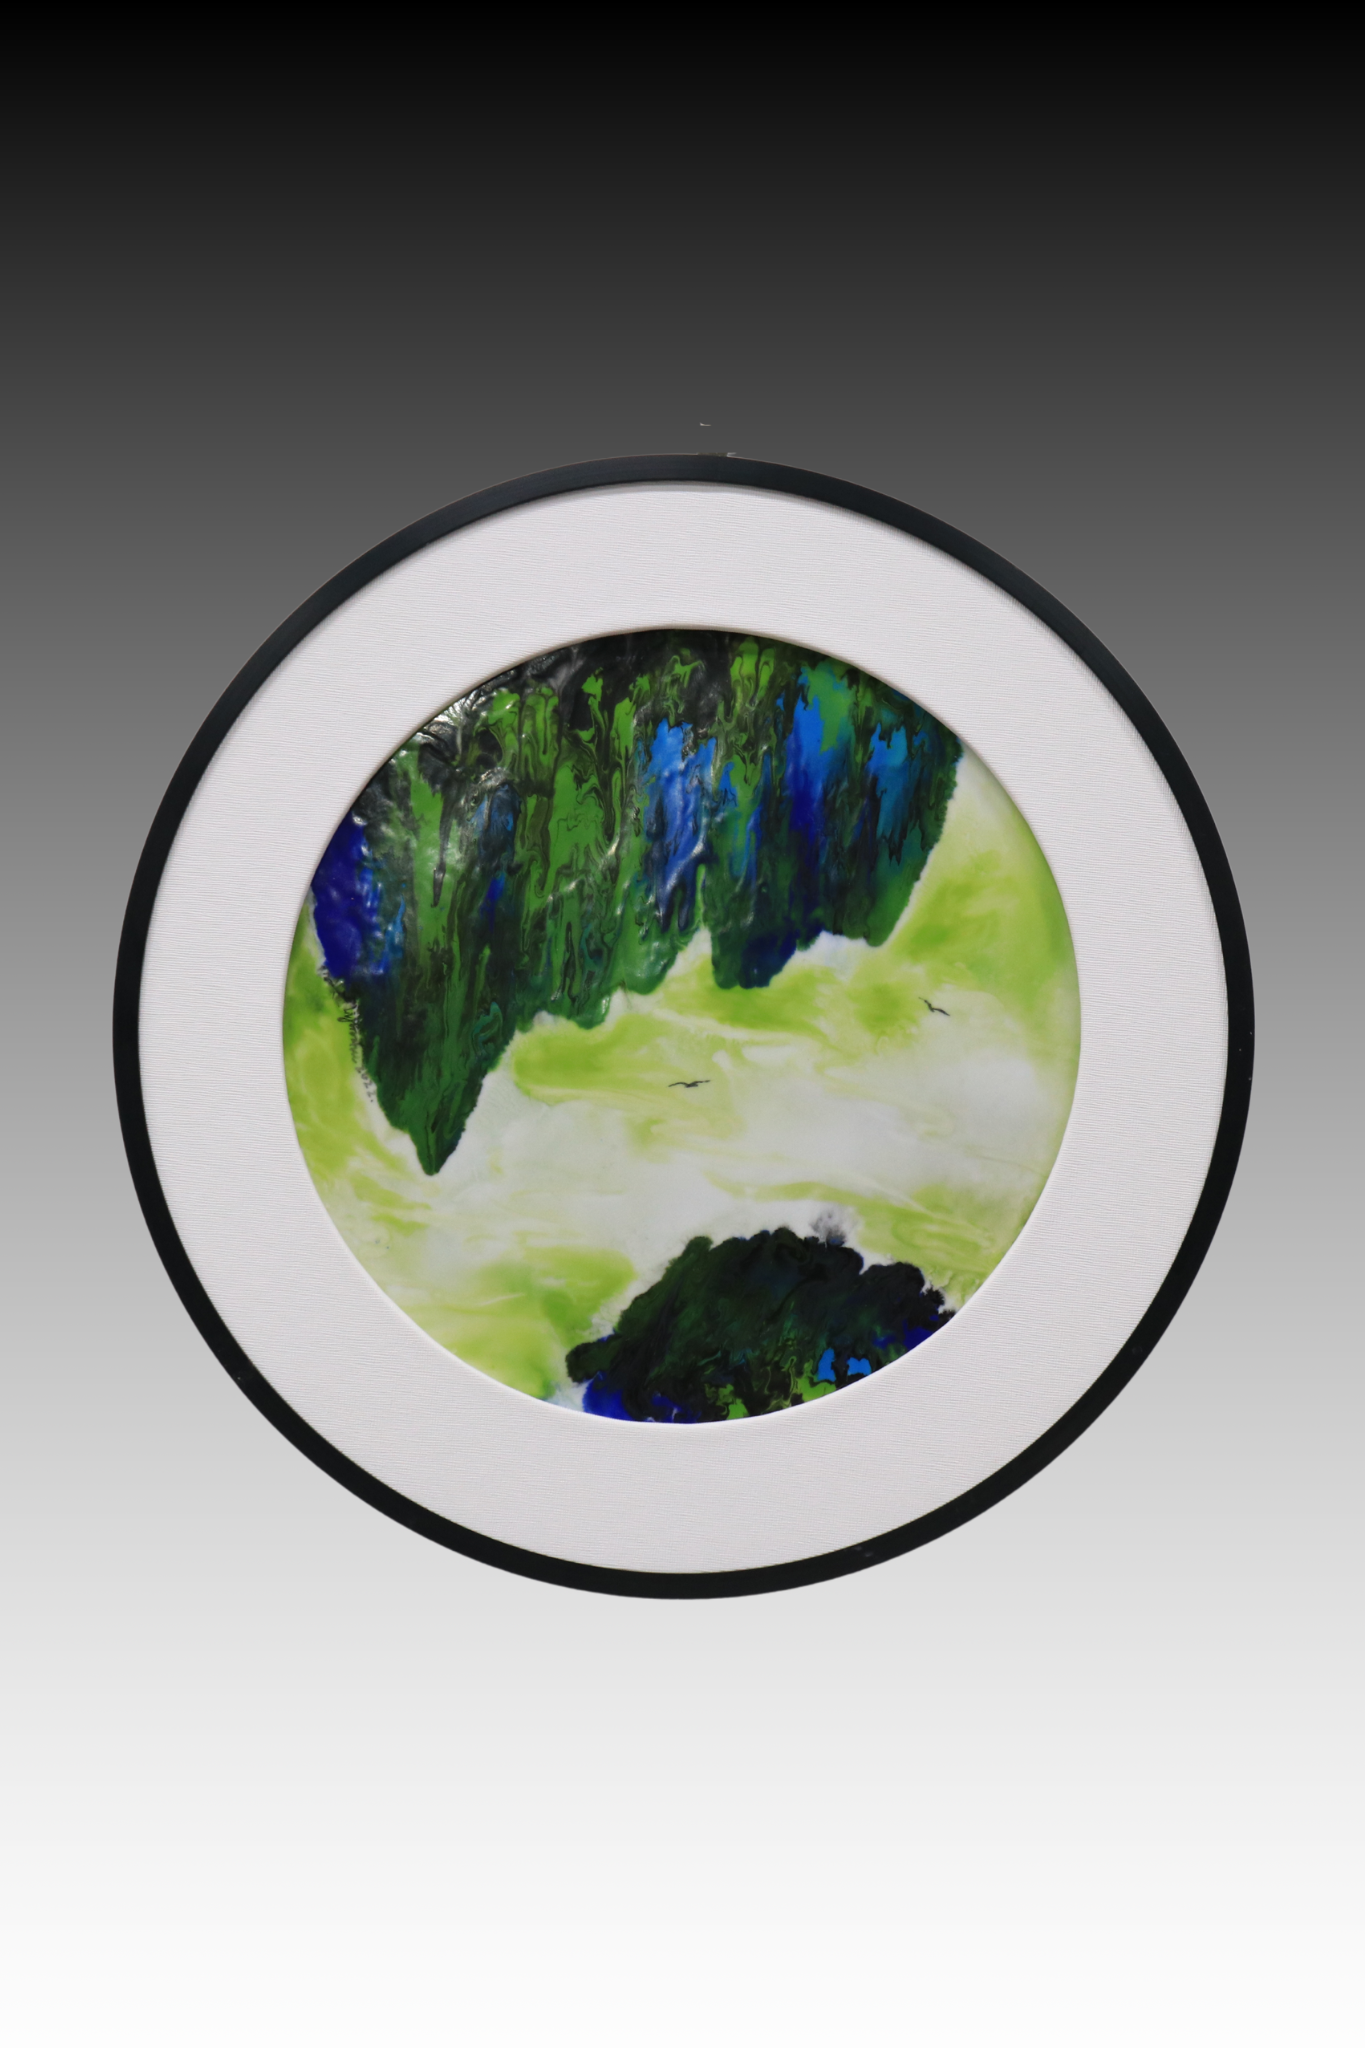 Porcelain Panel Painting, Fluid Art Porcelain Panel Painting, 只此青綠, Just This Lush Green, Splash Glaze, Flow Painting